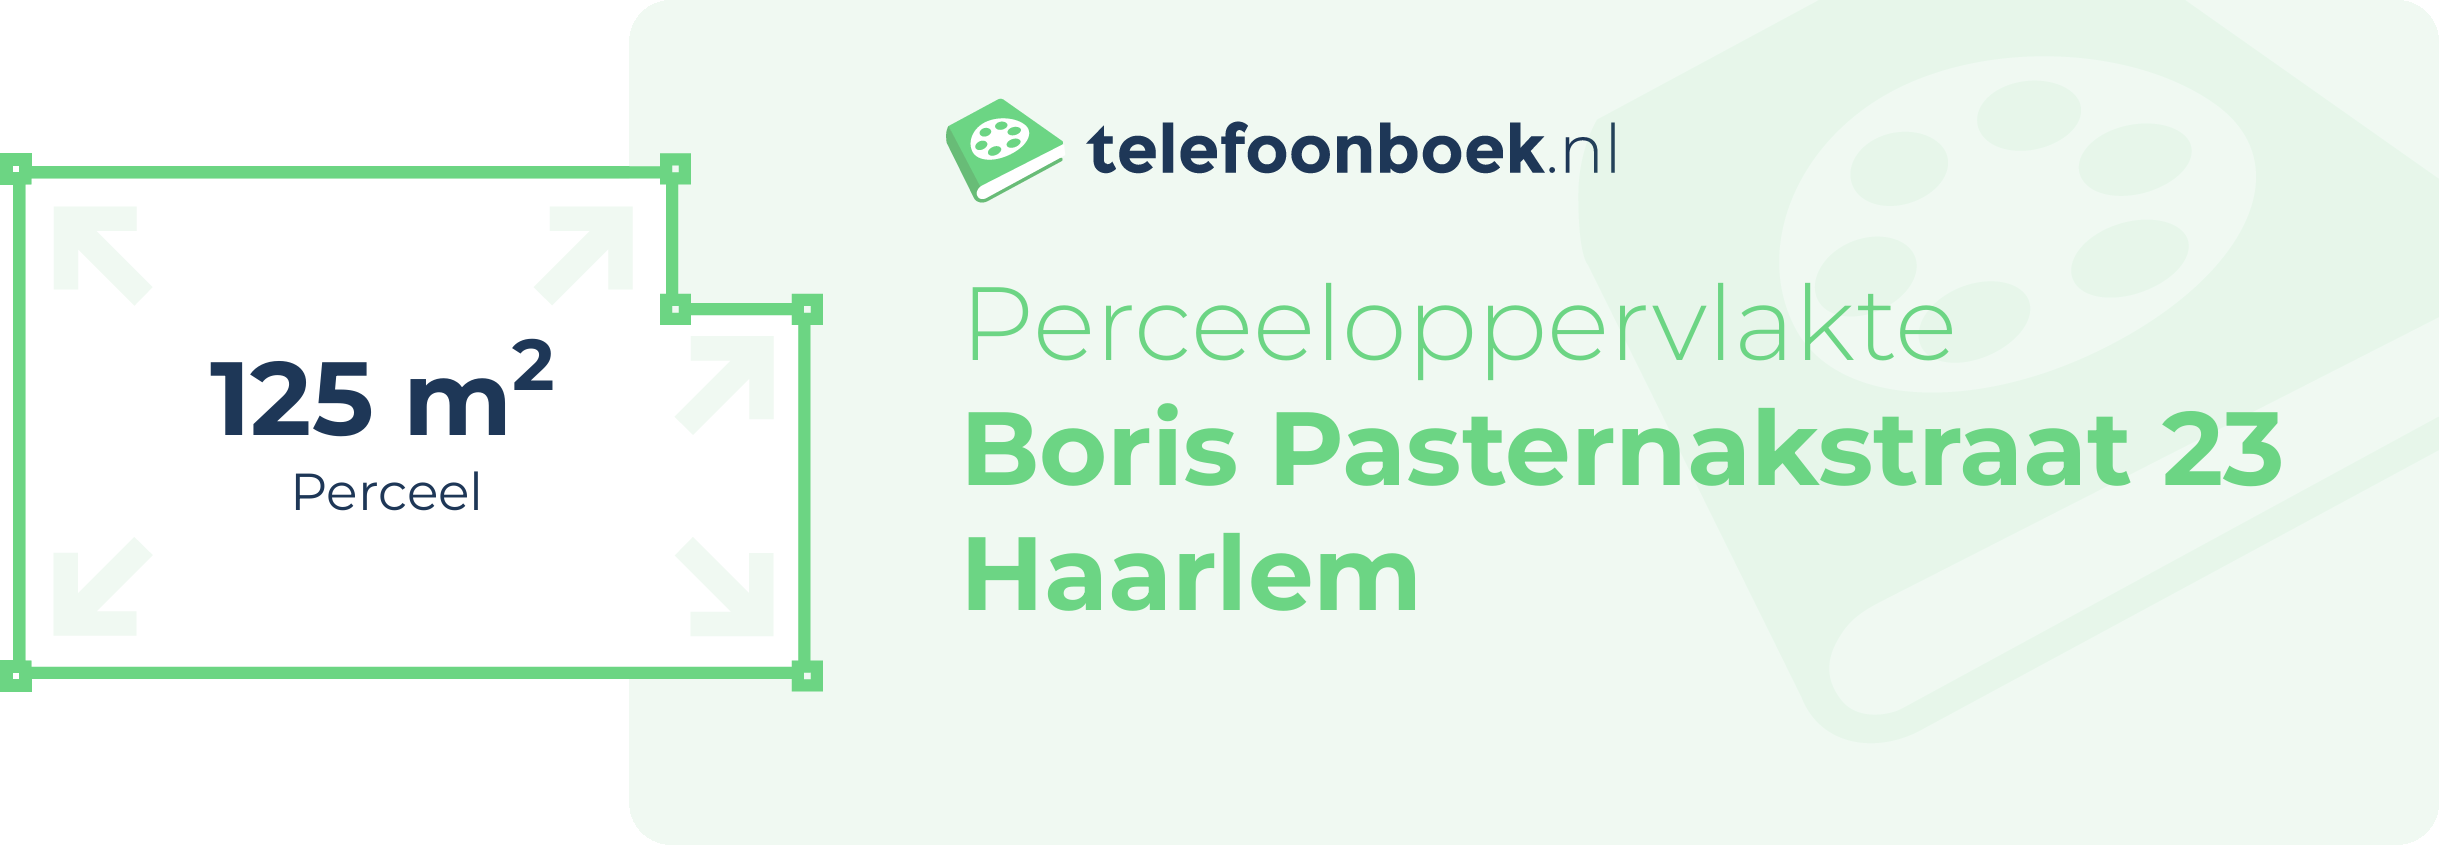 Perceeloppervlakte Boris Pasternakstraat 23 Haarlem